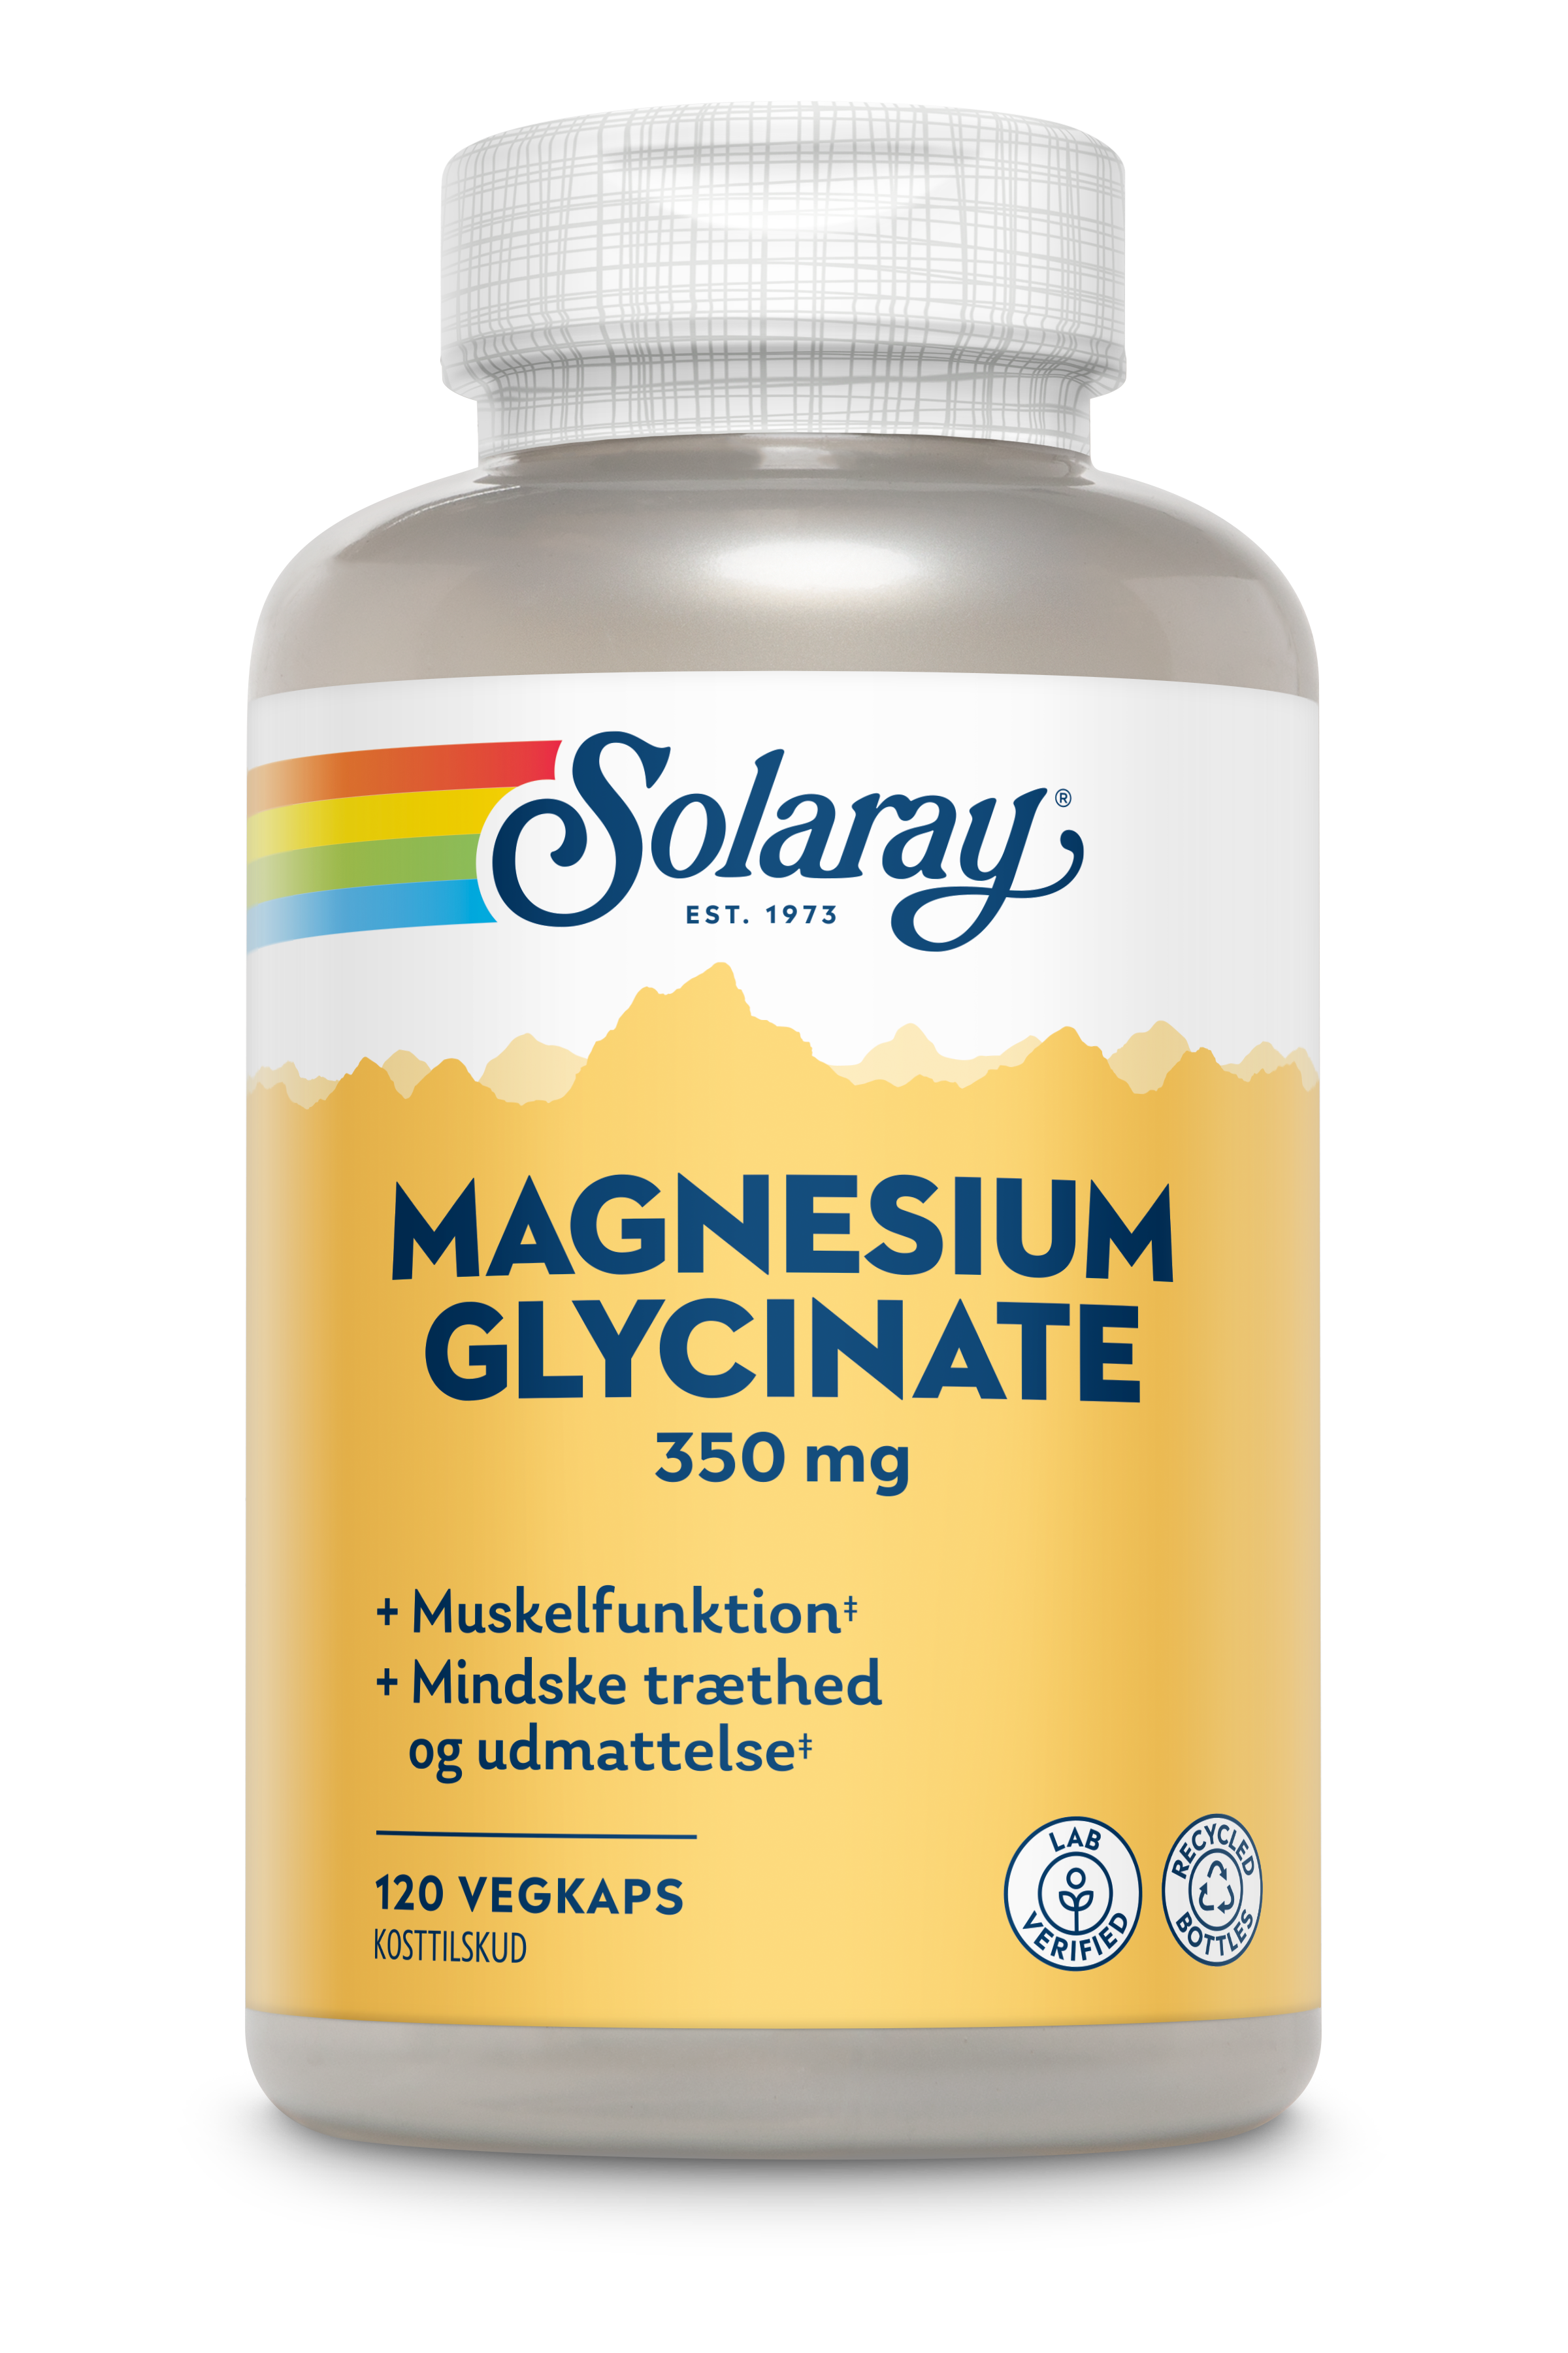 Magnesium Glycinat produktfoto